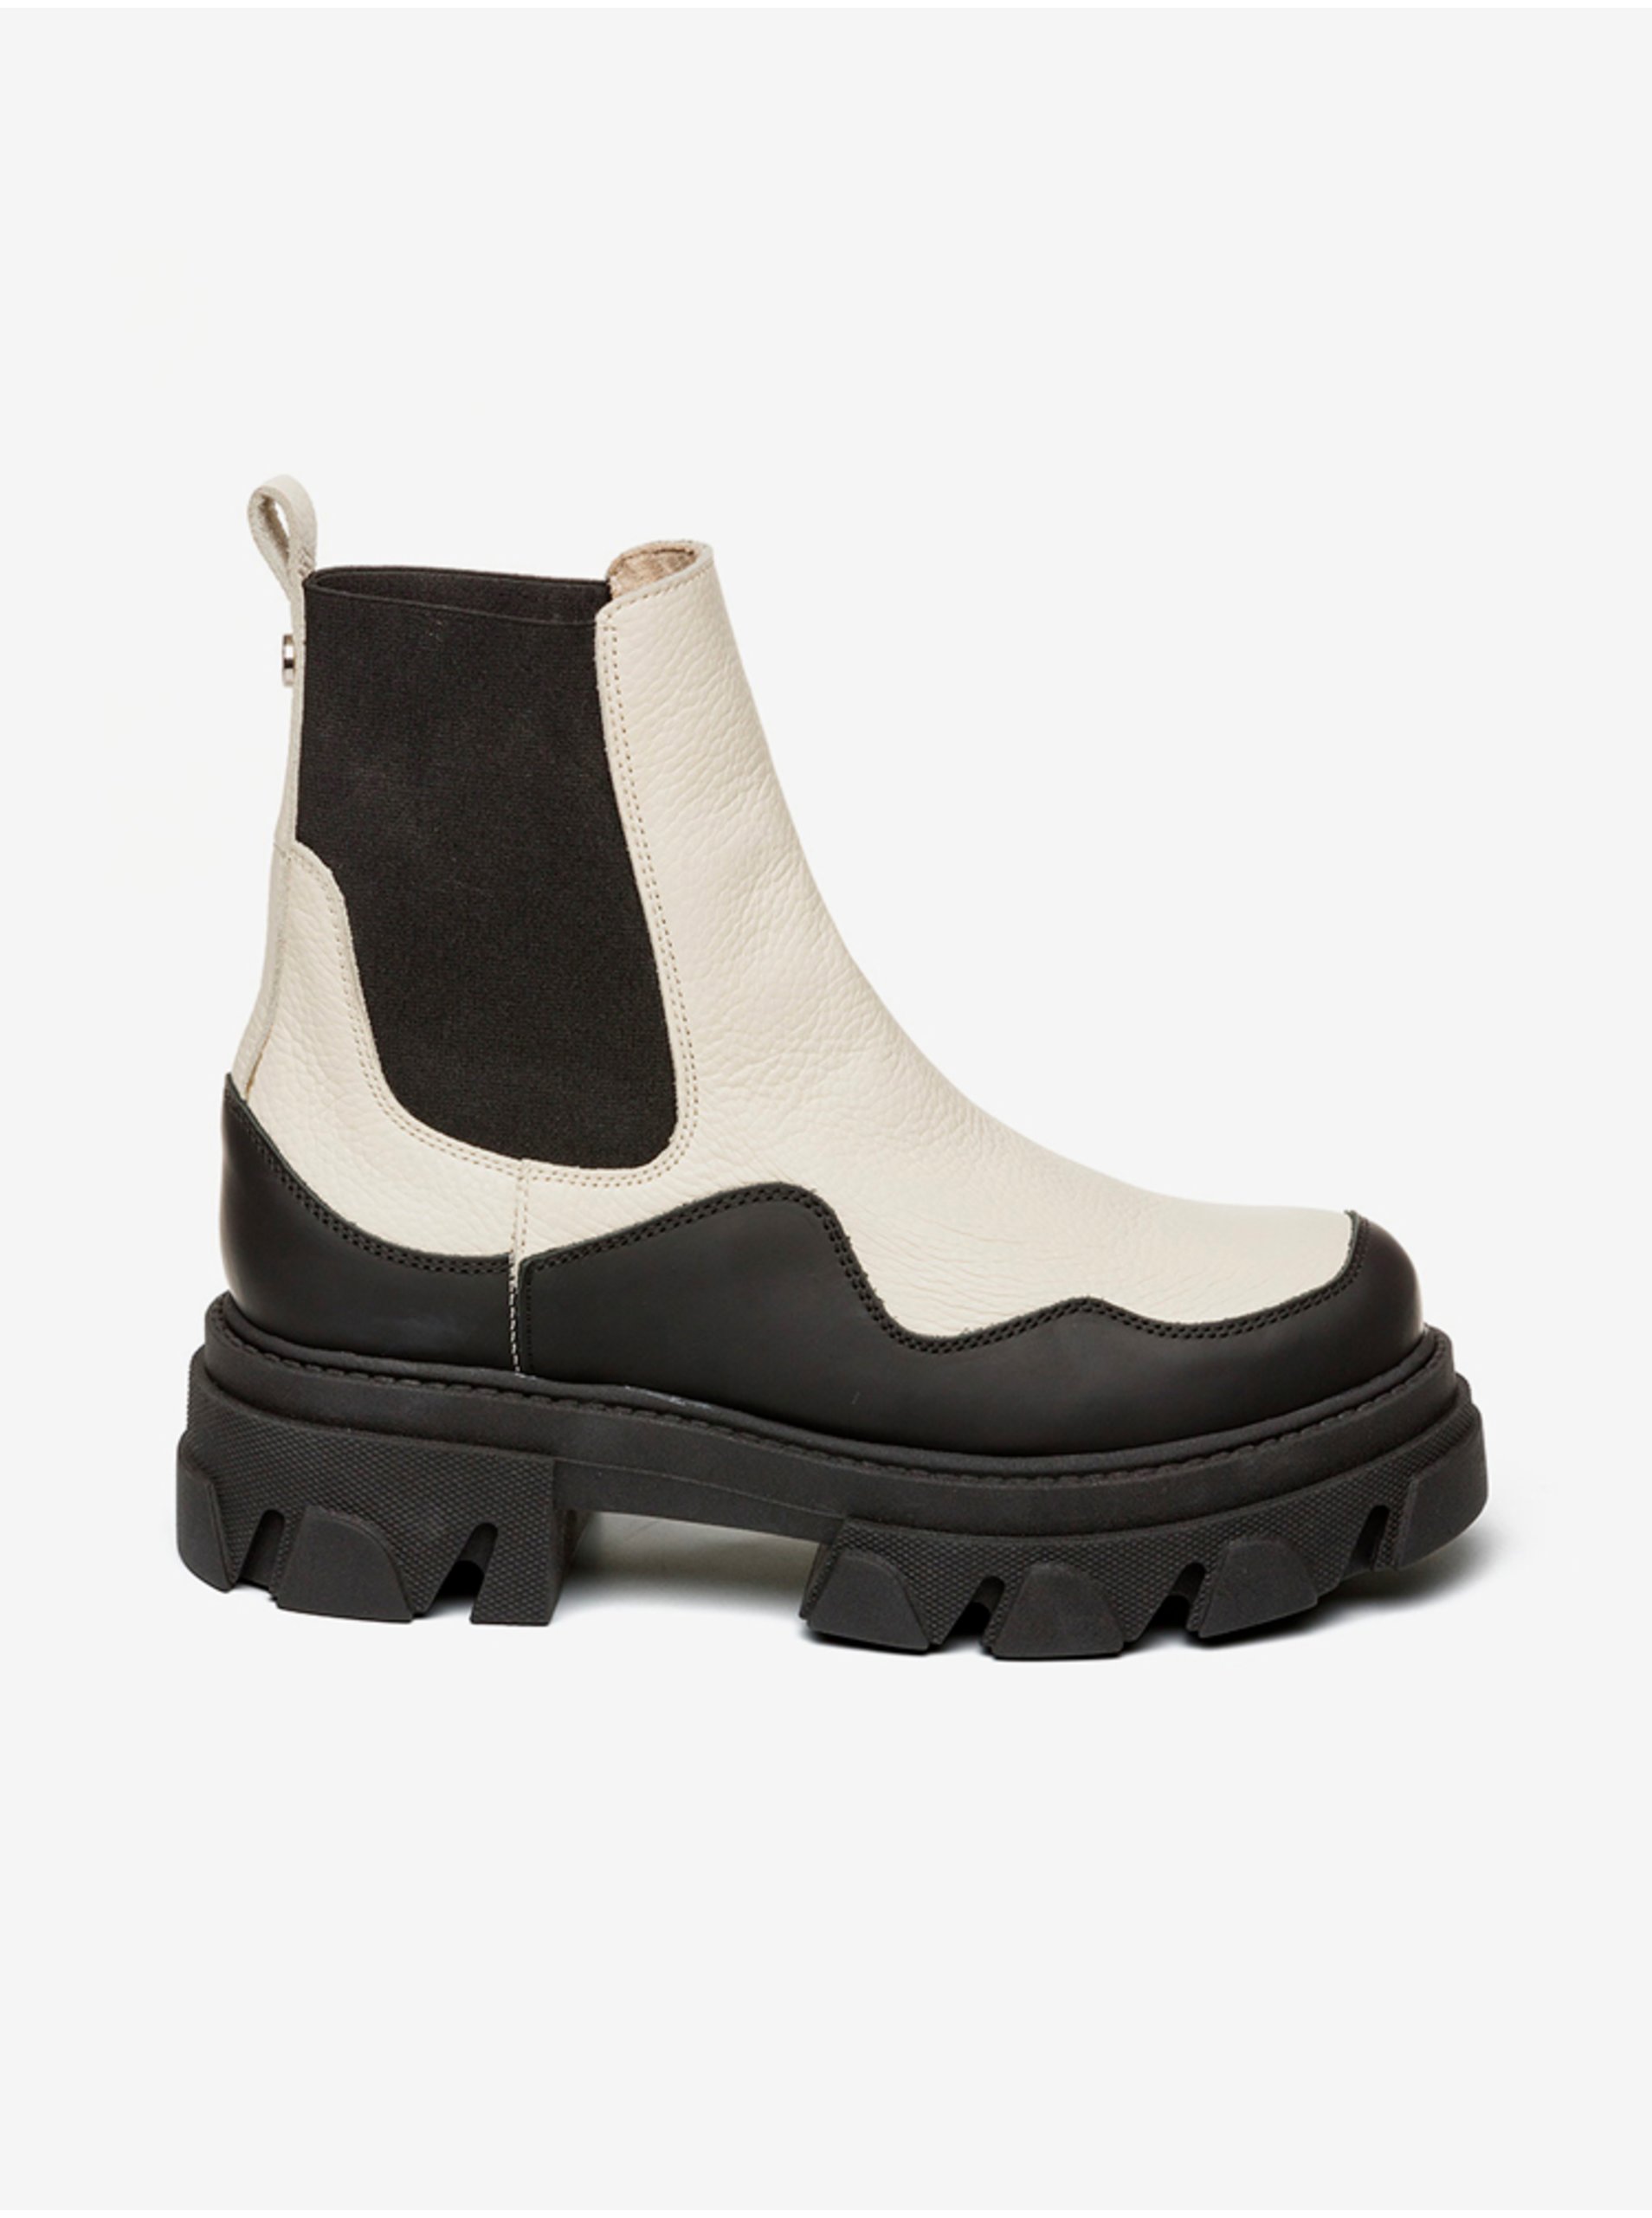 E-shop Černo-krémové kožené kotníkové boty Steve Madden Merilyn